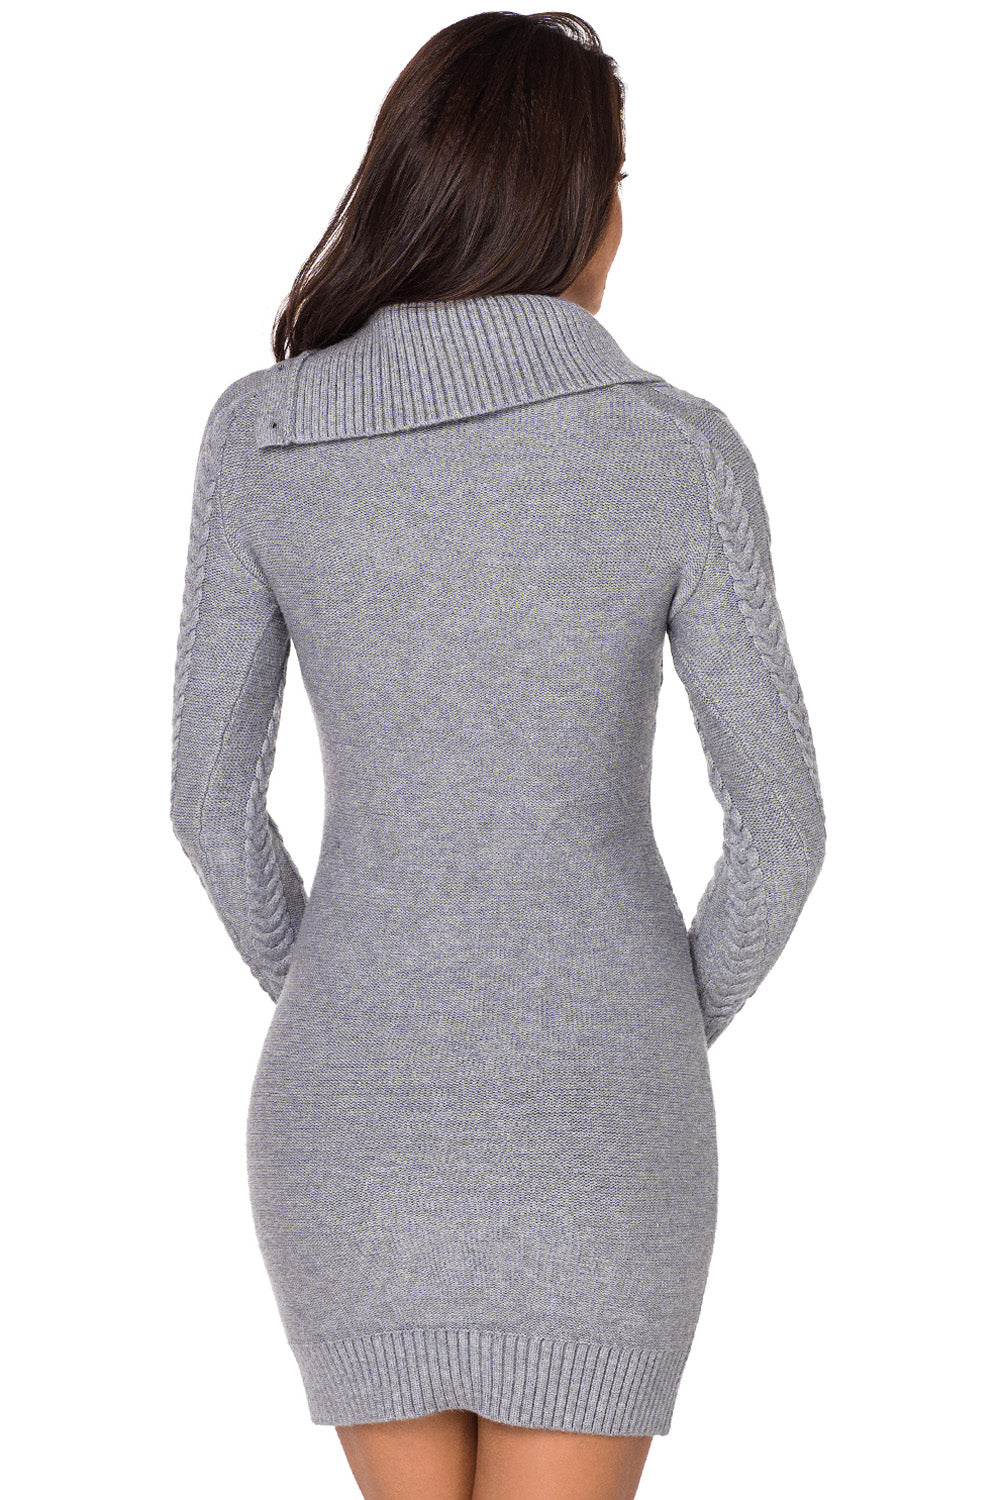 Asymmetric Buttoned Collar Grey Bodycon Sweater Dress